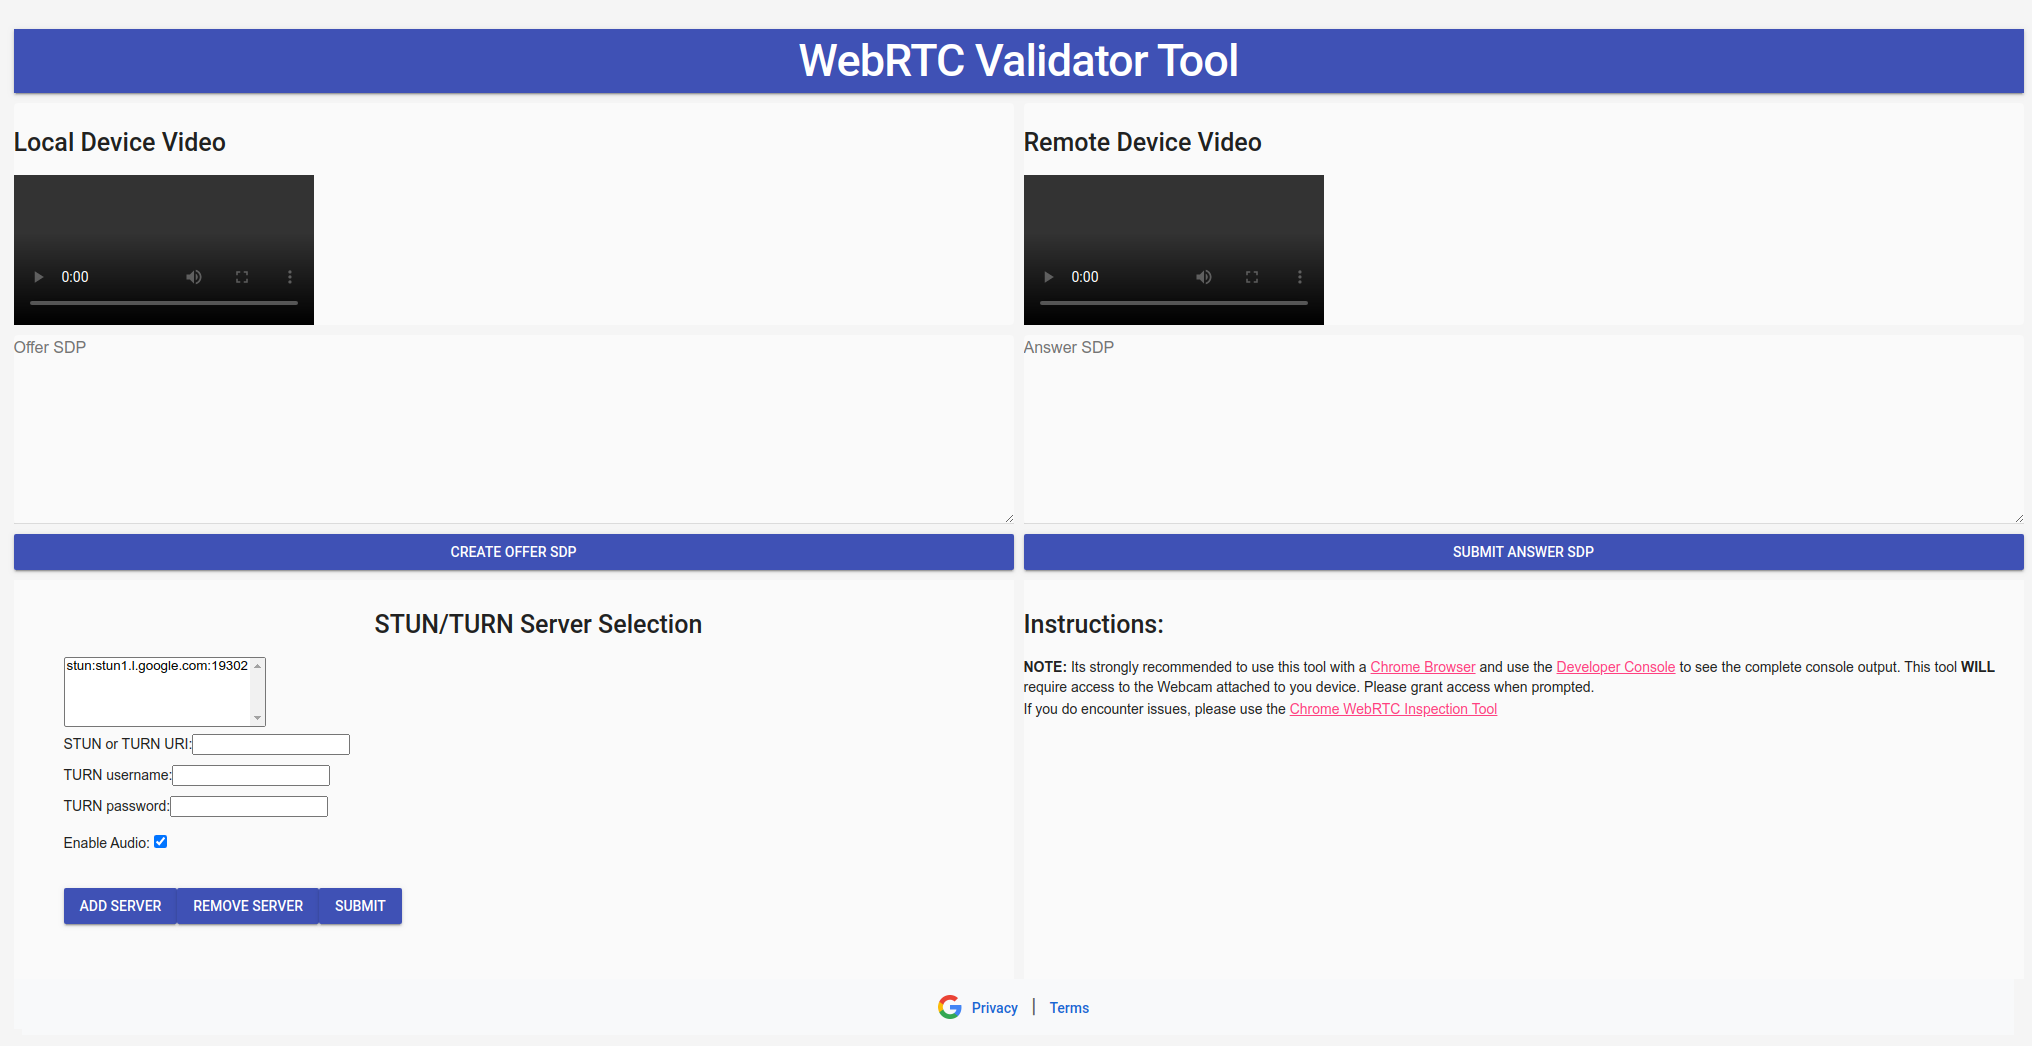 WebRTC 驗證工具的總覽圖片。